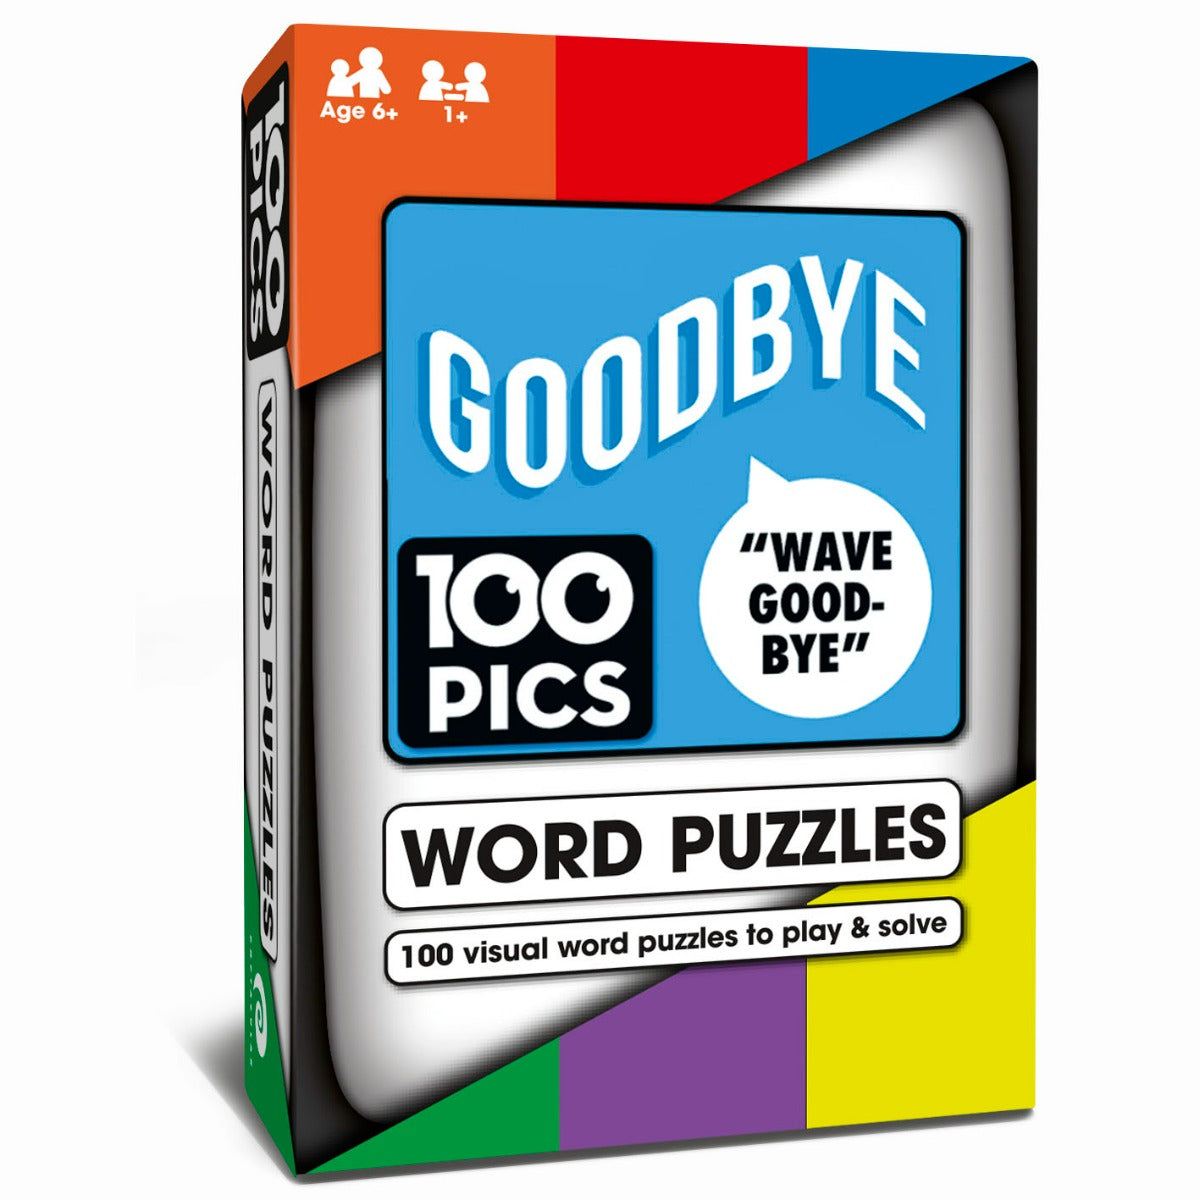 100 PICS Word Puzzles